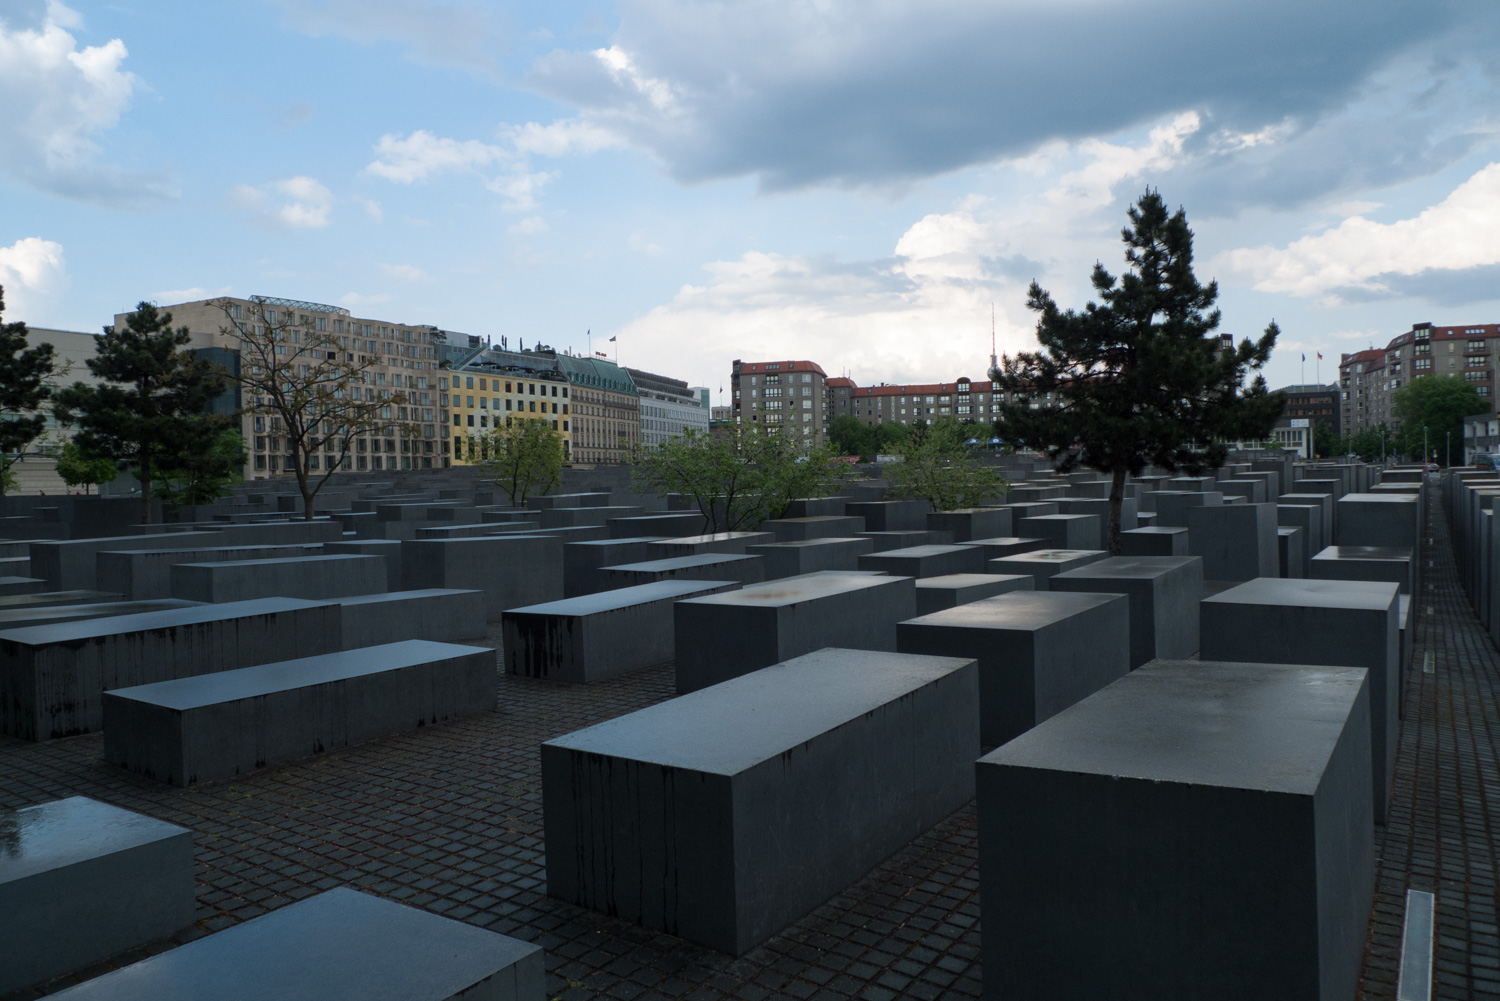 21. Holocaust Monument